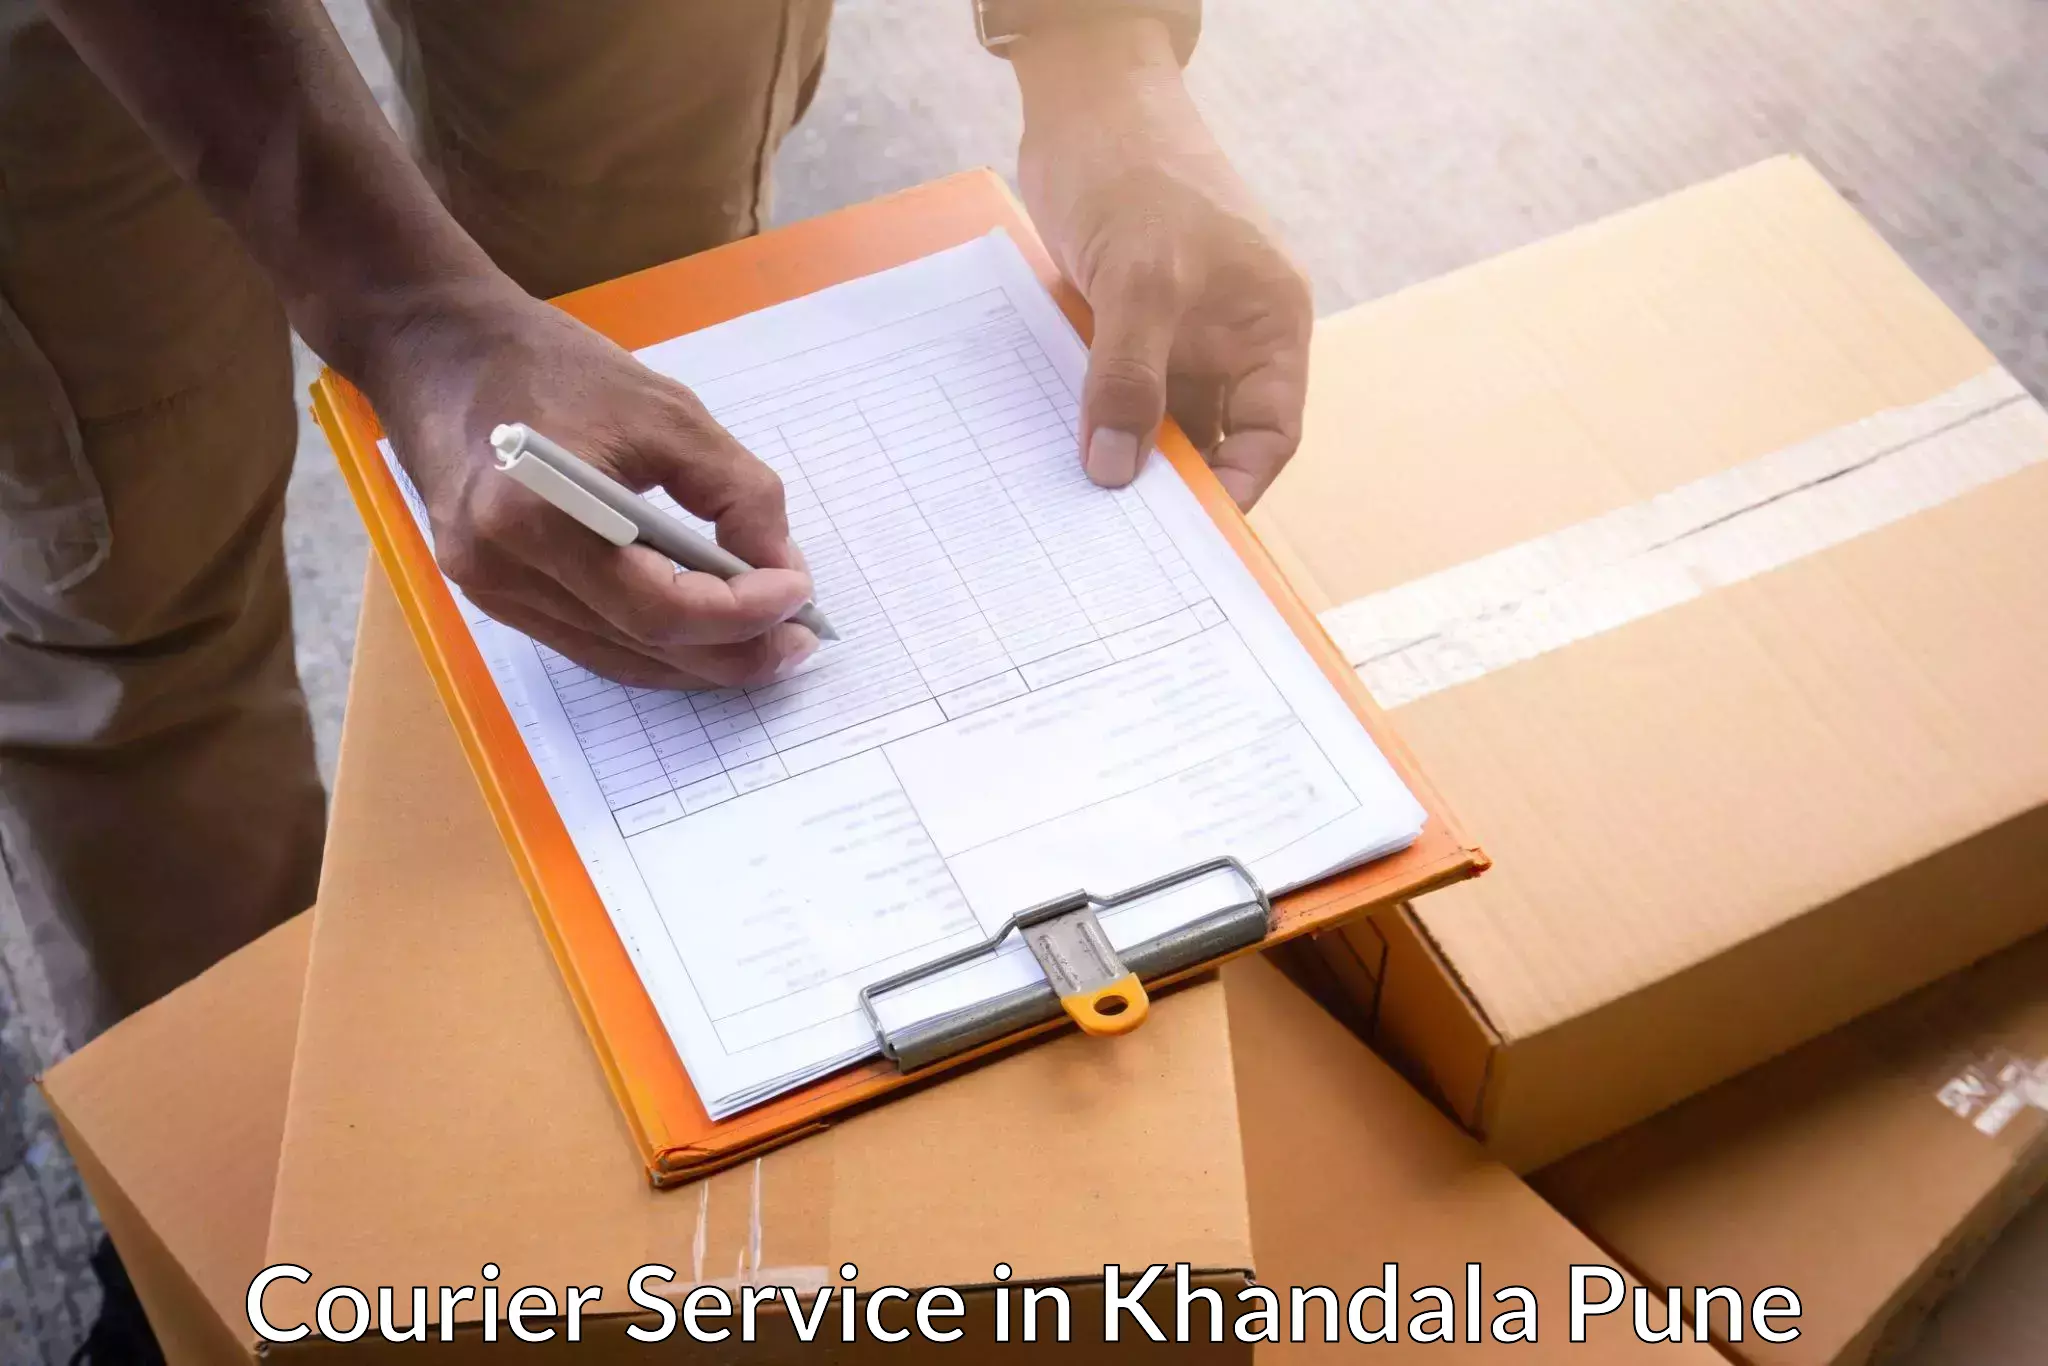 Efficient cargo services in Khandala Pune